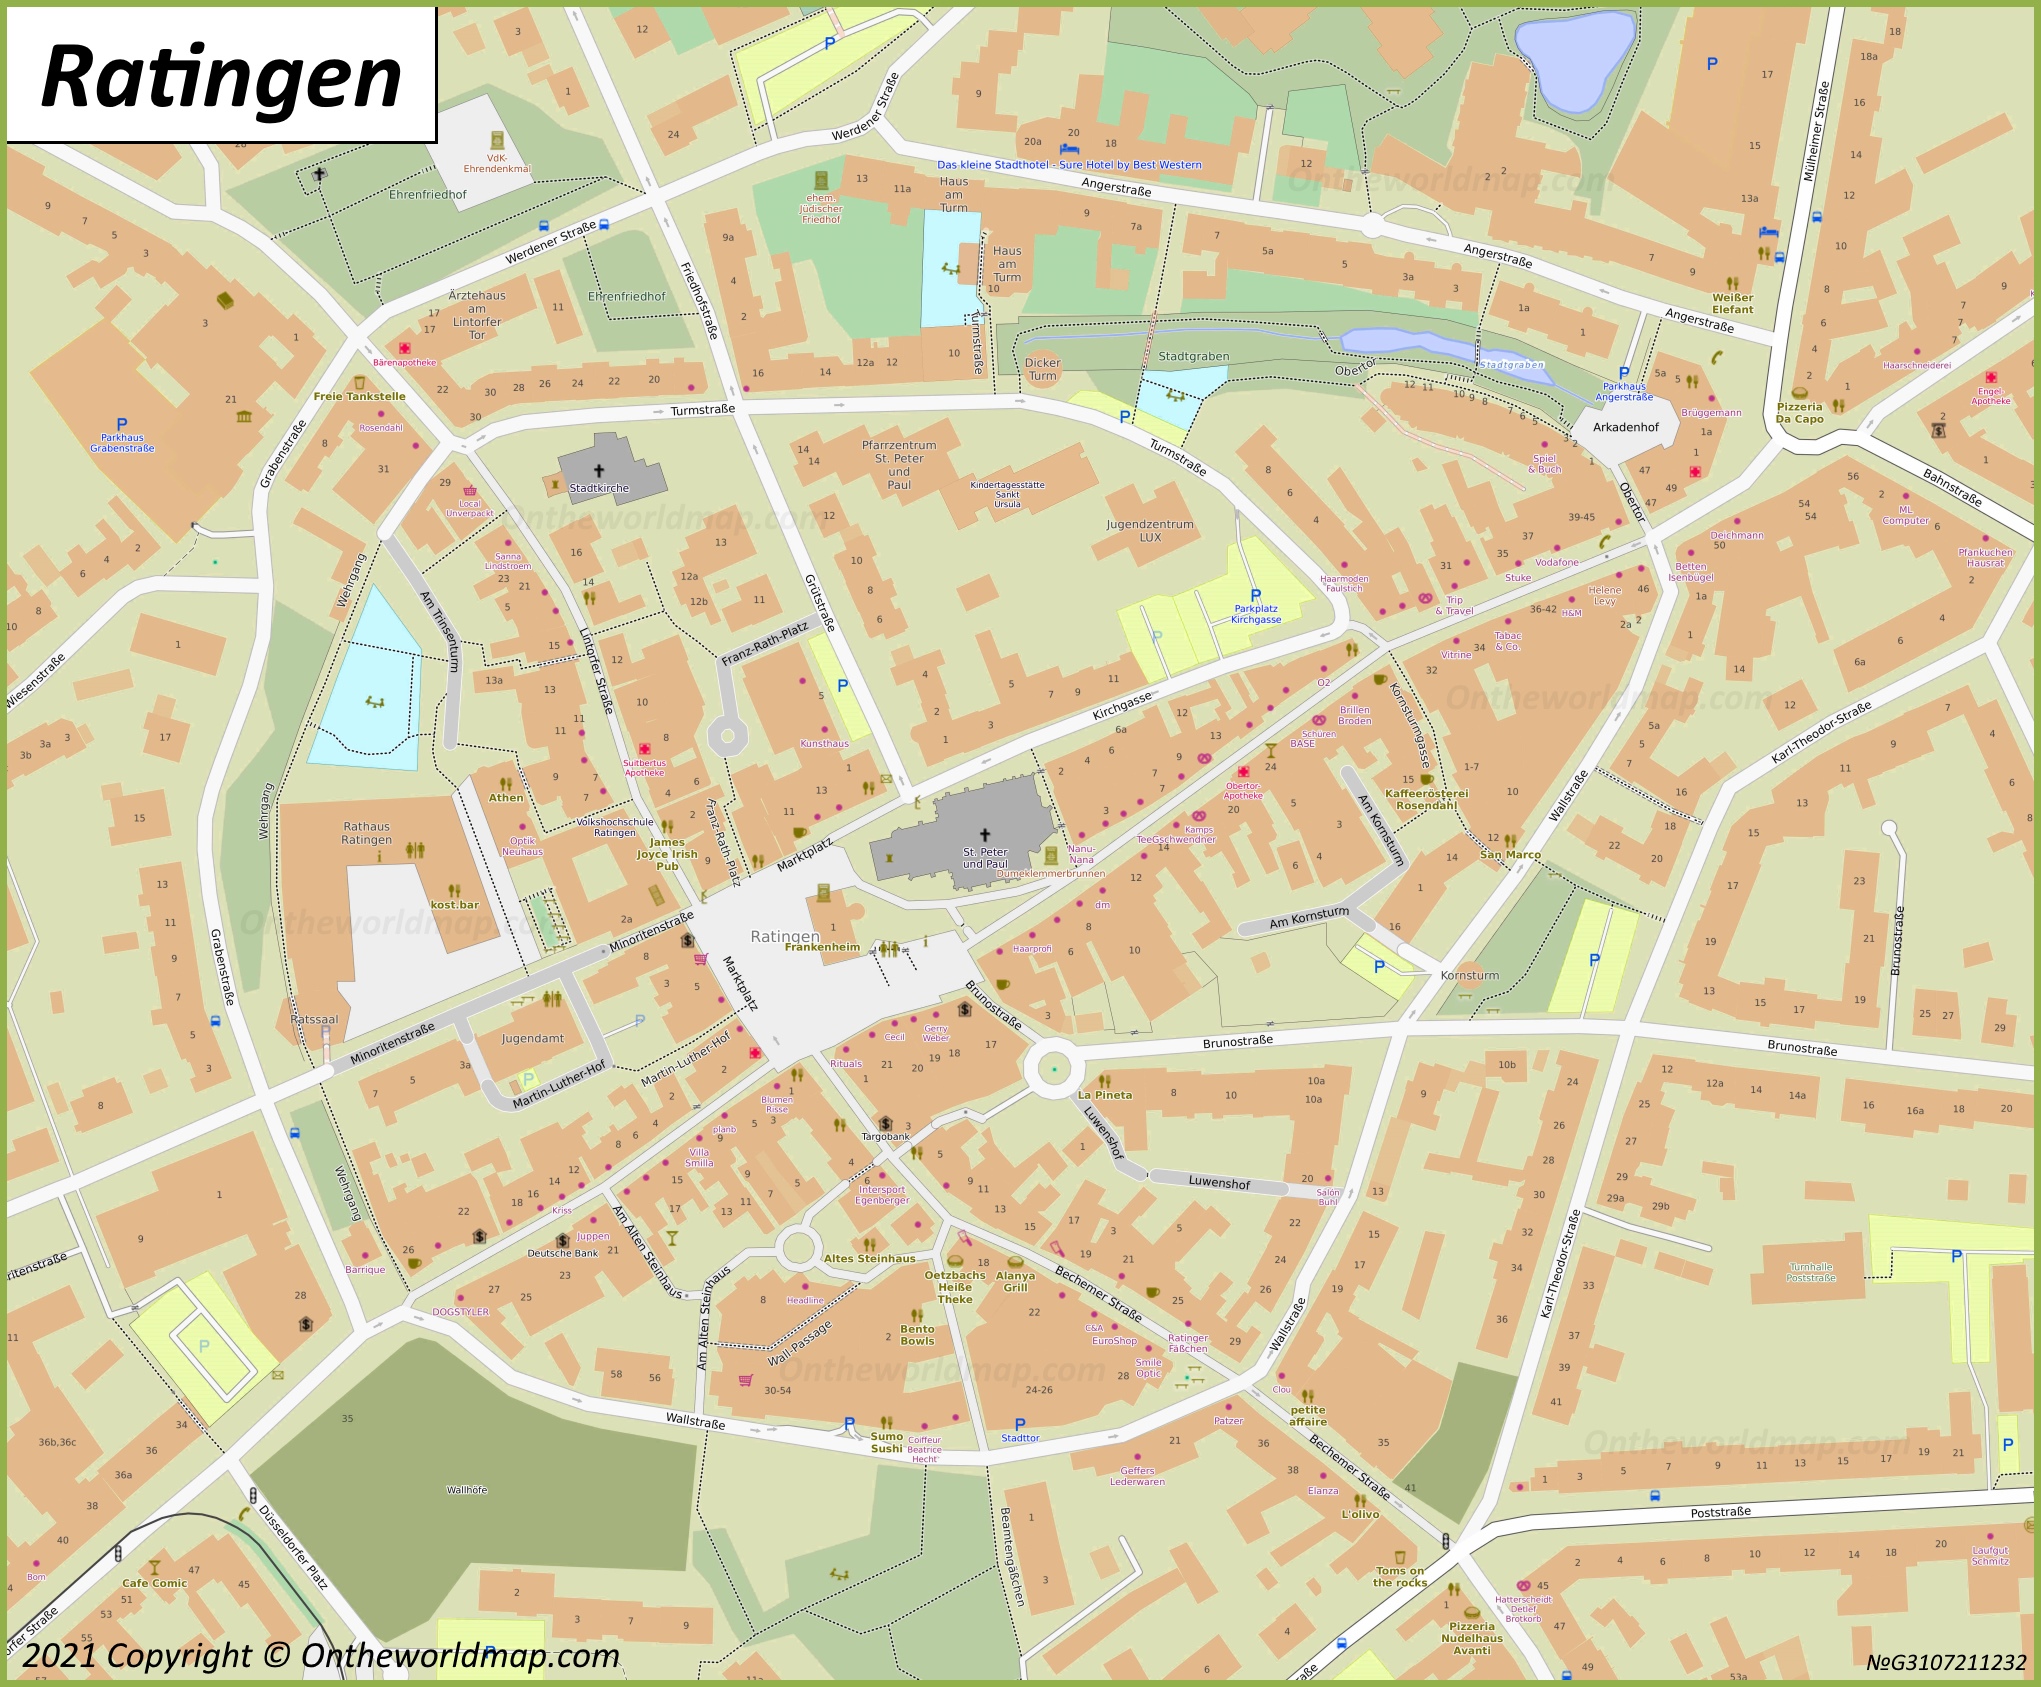 Ratingen City Center Map